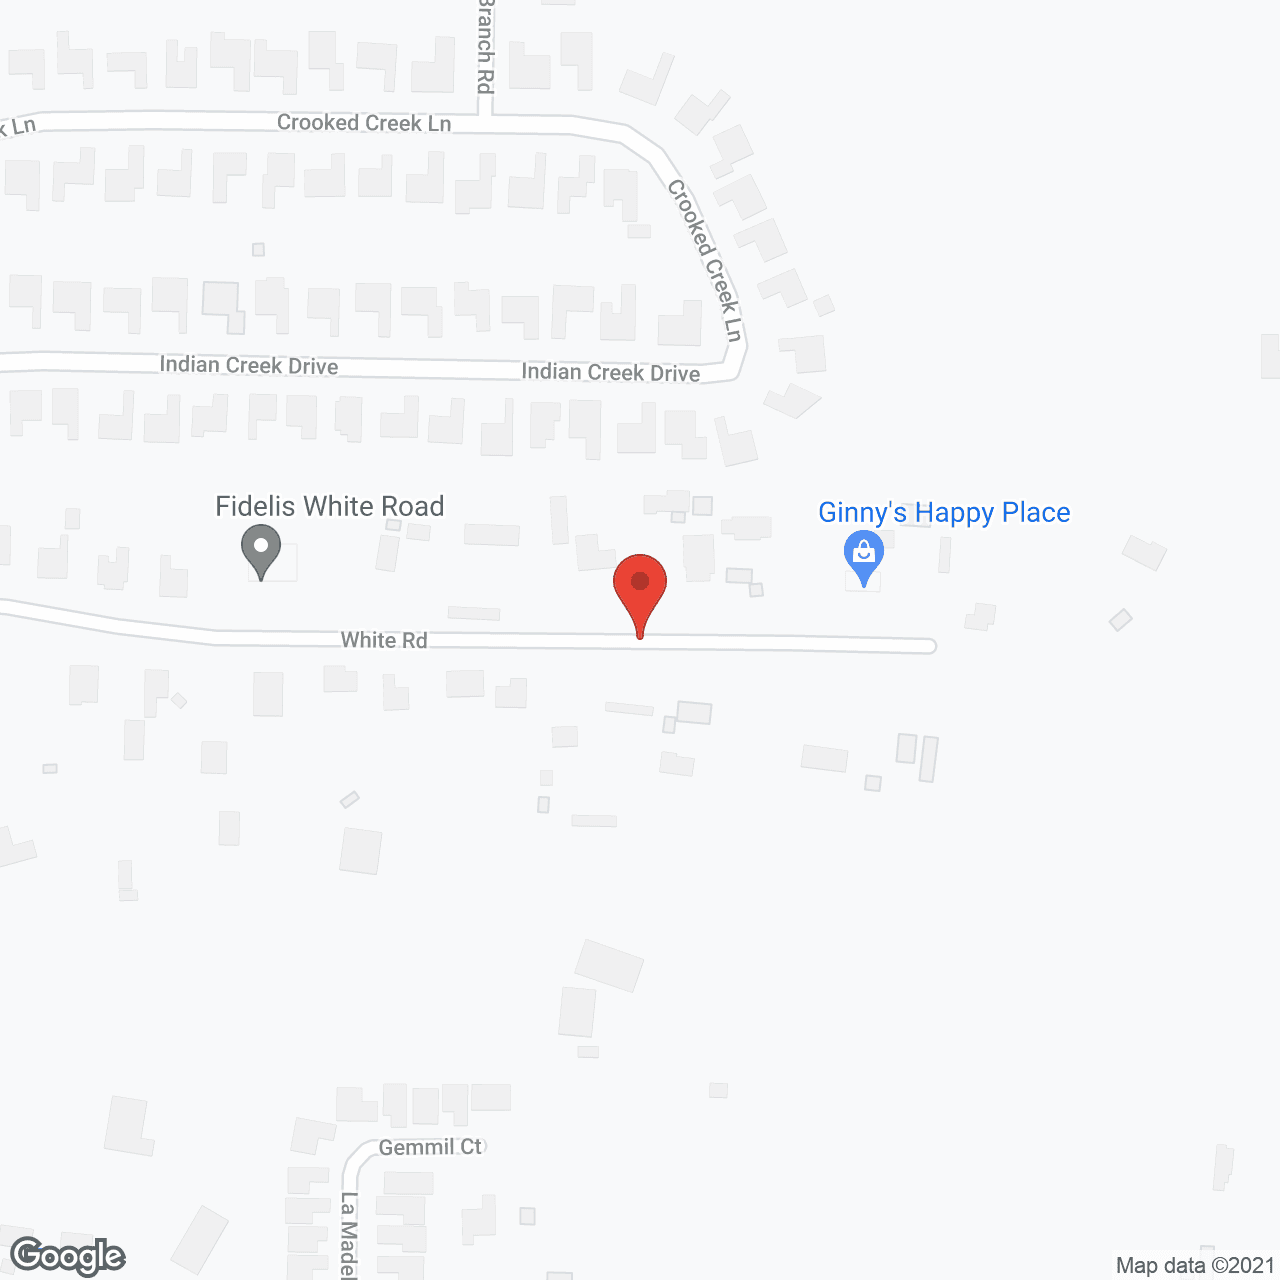 Fidelis White Road - Level 2 in google map